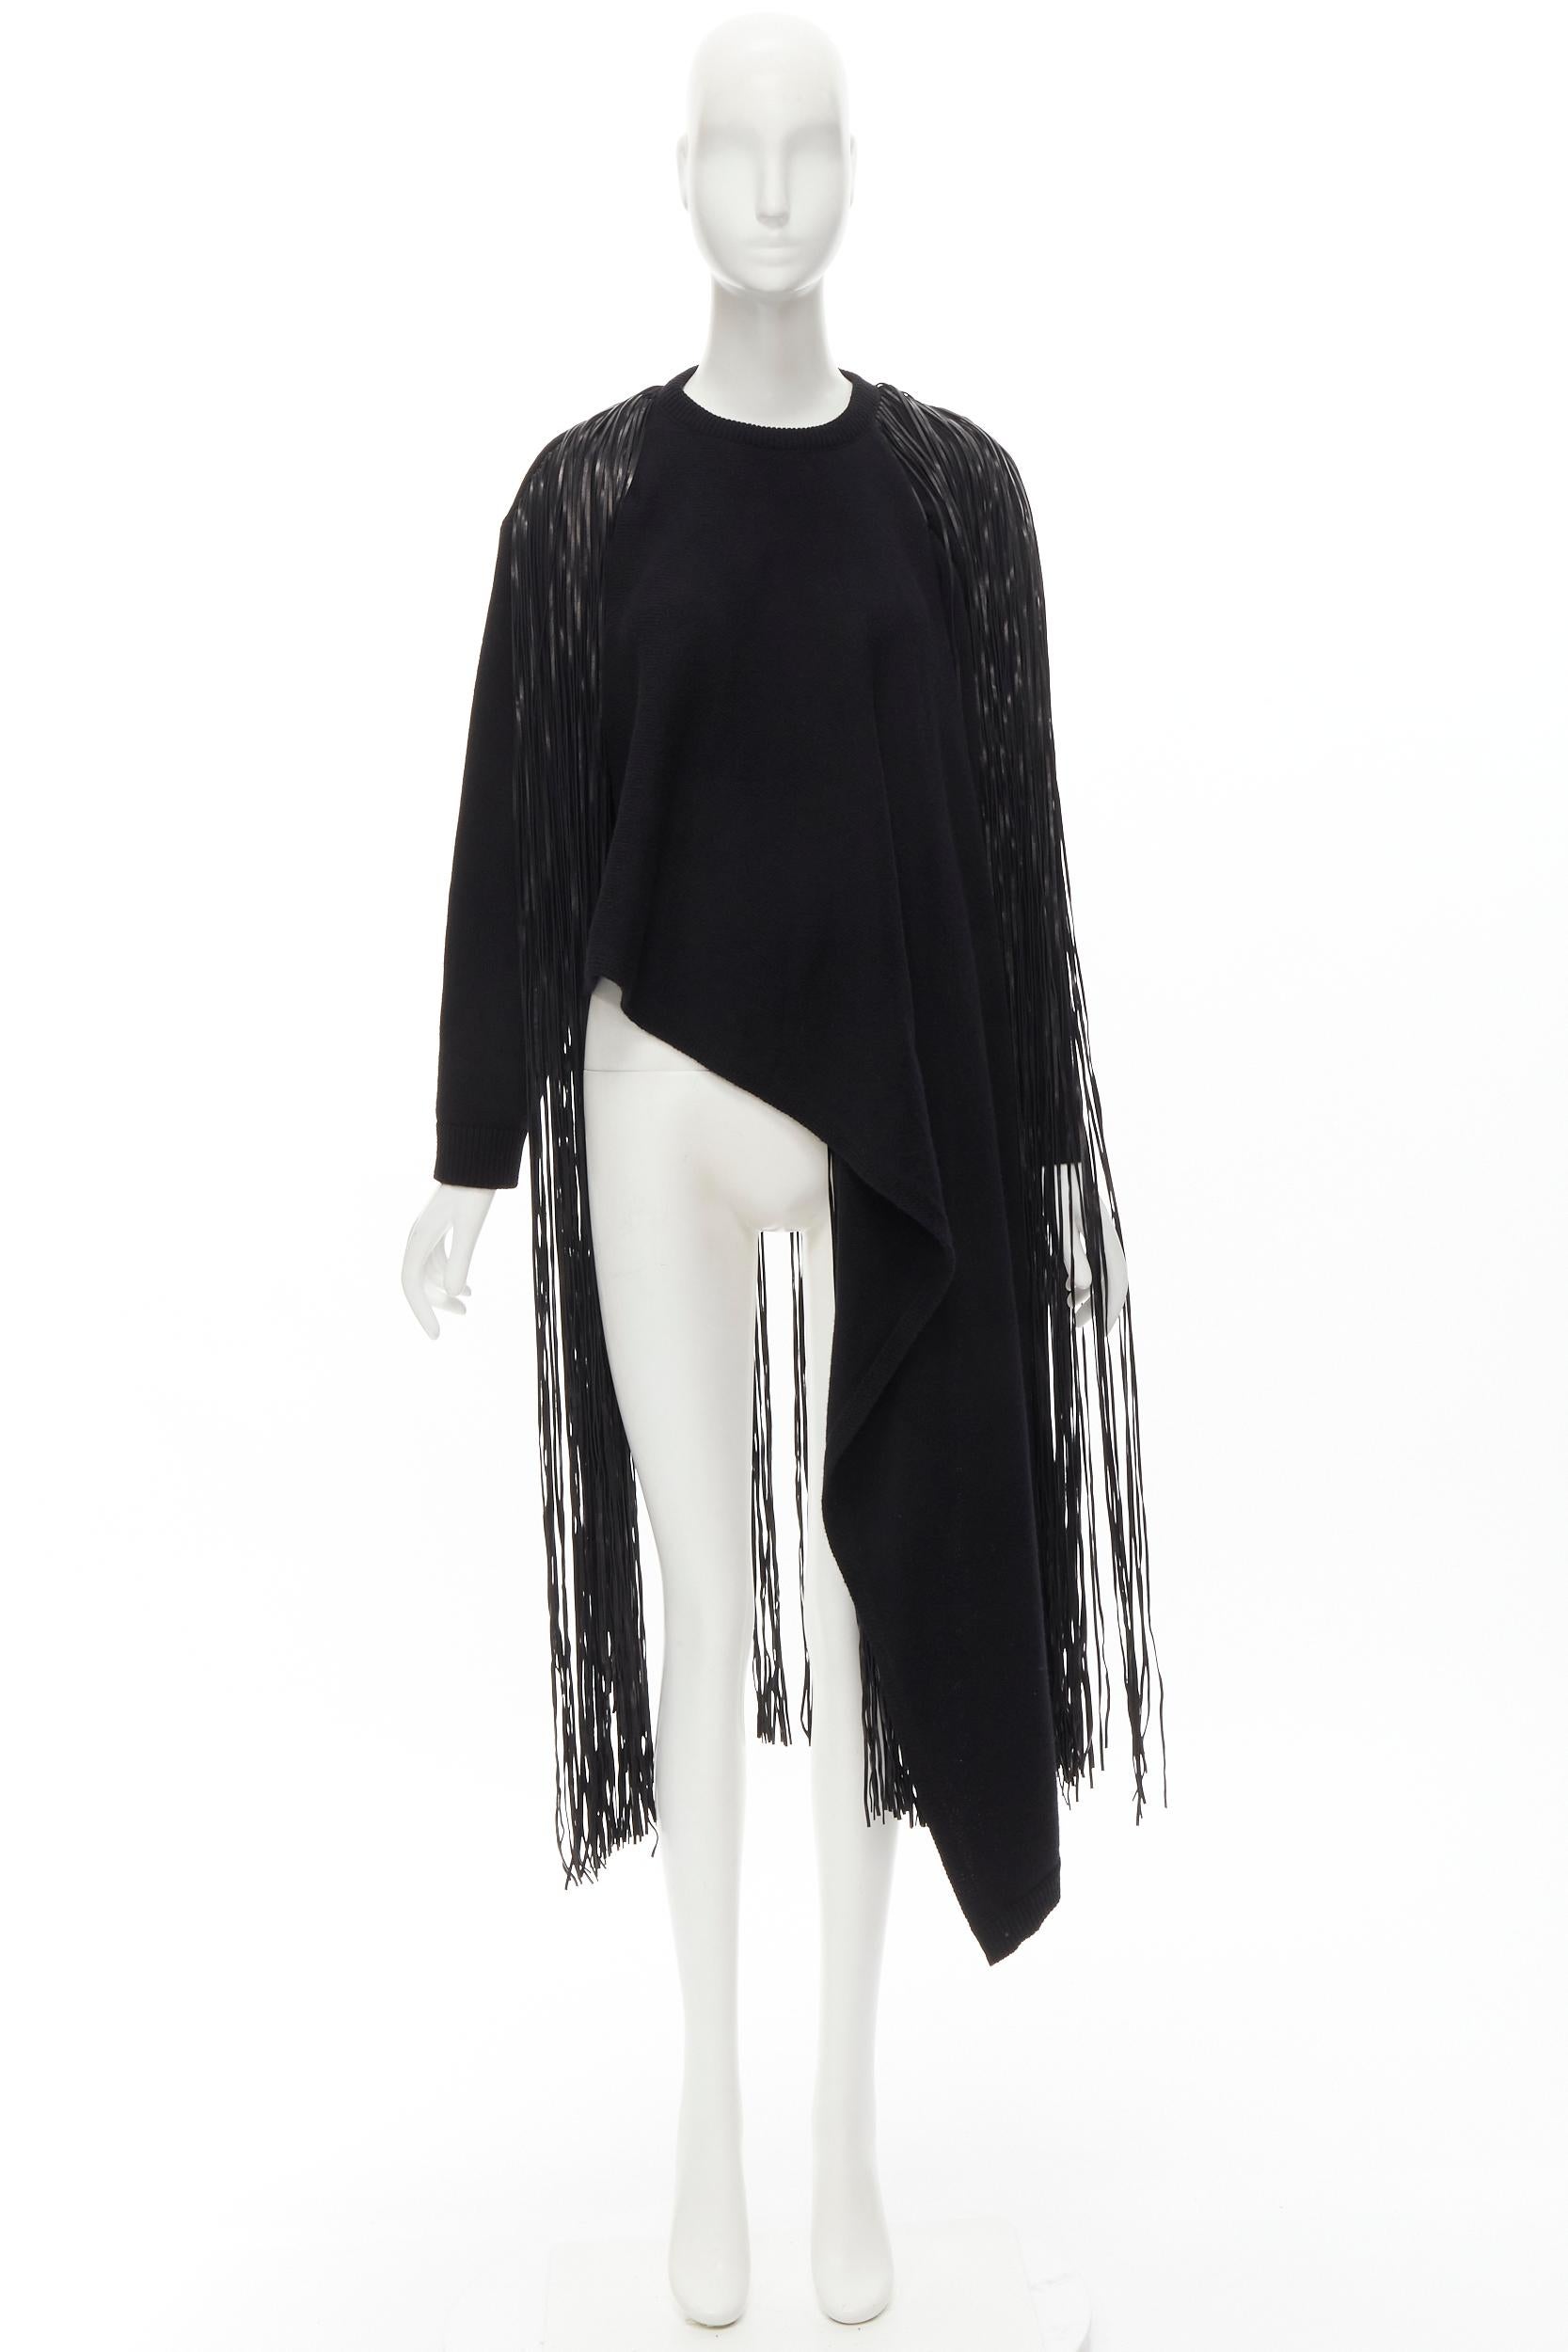 VALENTINO black virgin wool cashmere leather fringe wrap scarf sweater M 7